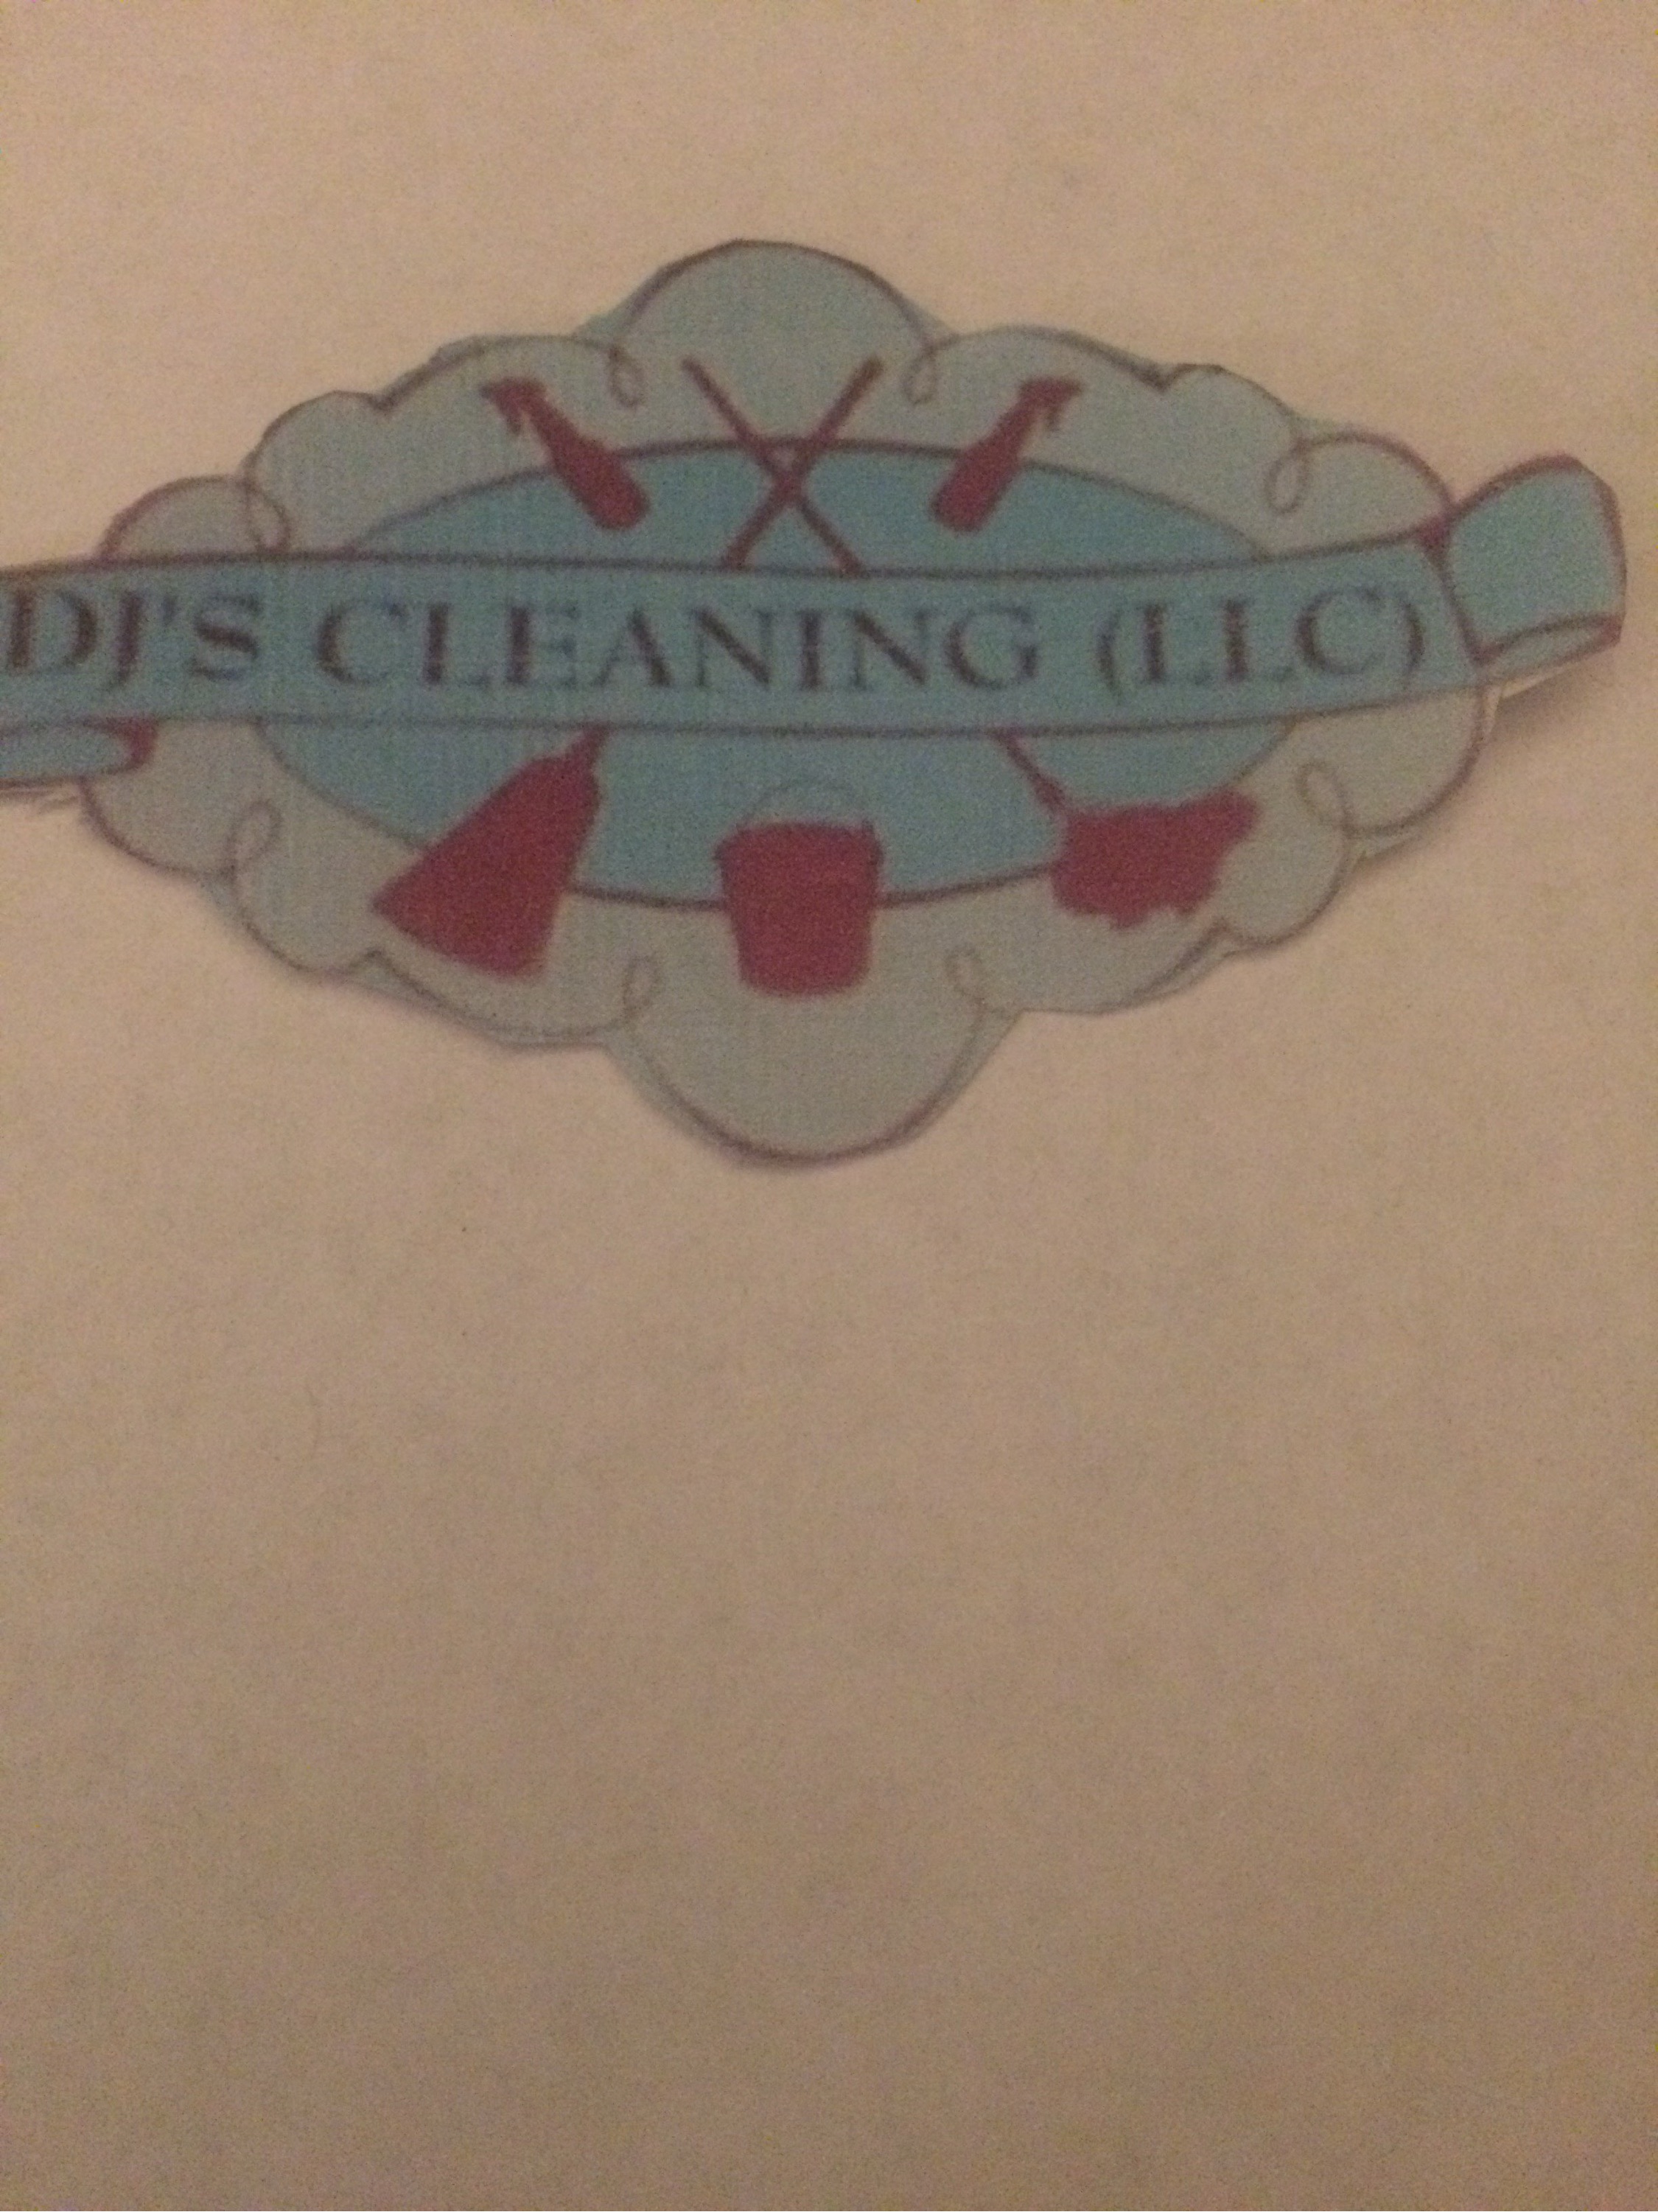 DJ's Cleaning Logo